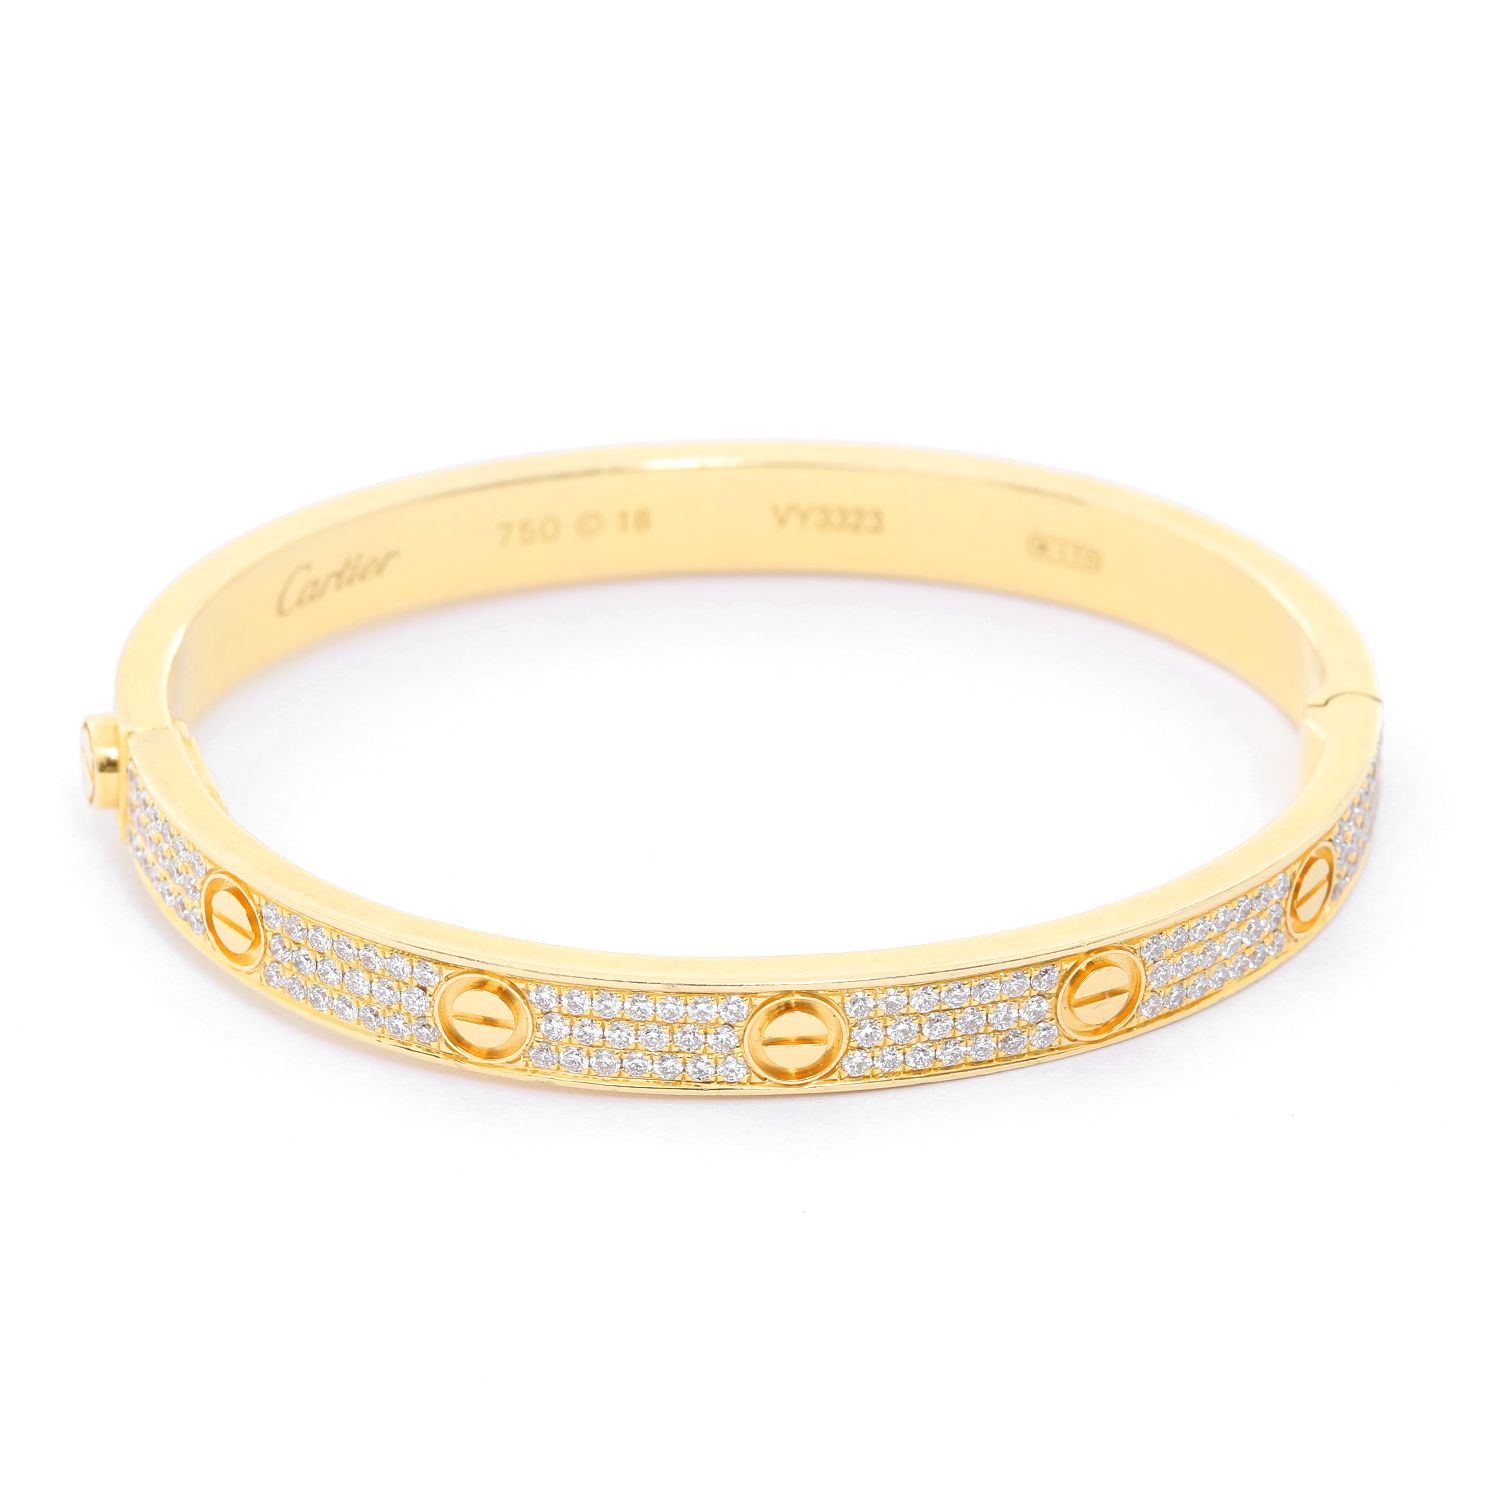 LOVE# bracelet, 1 diamond